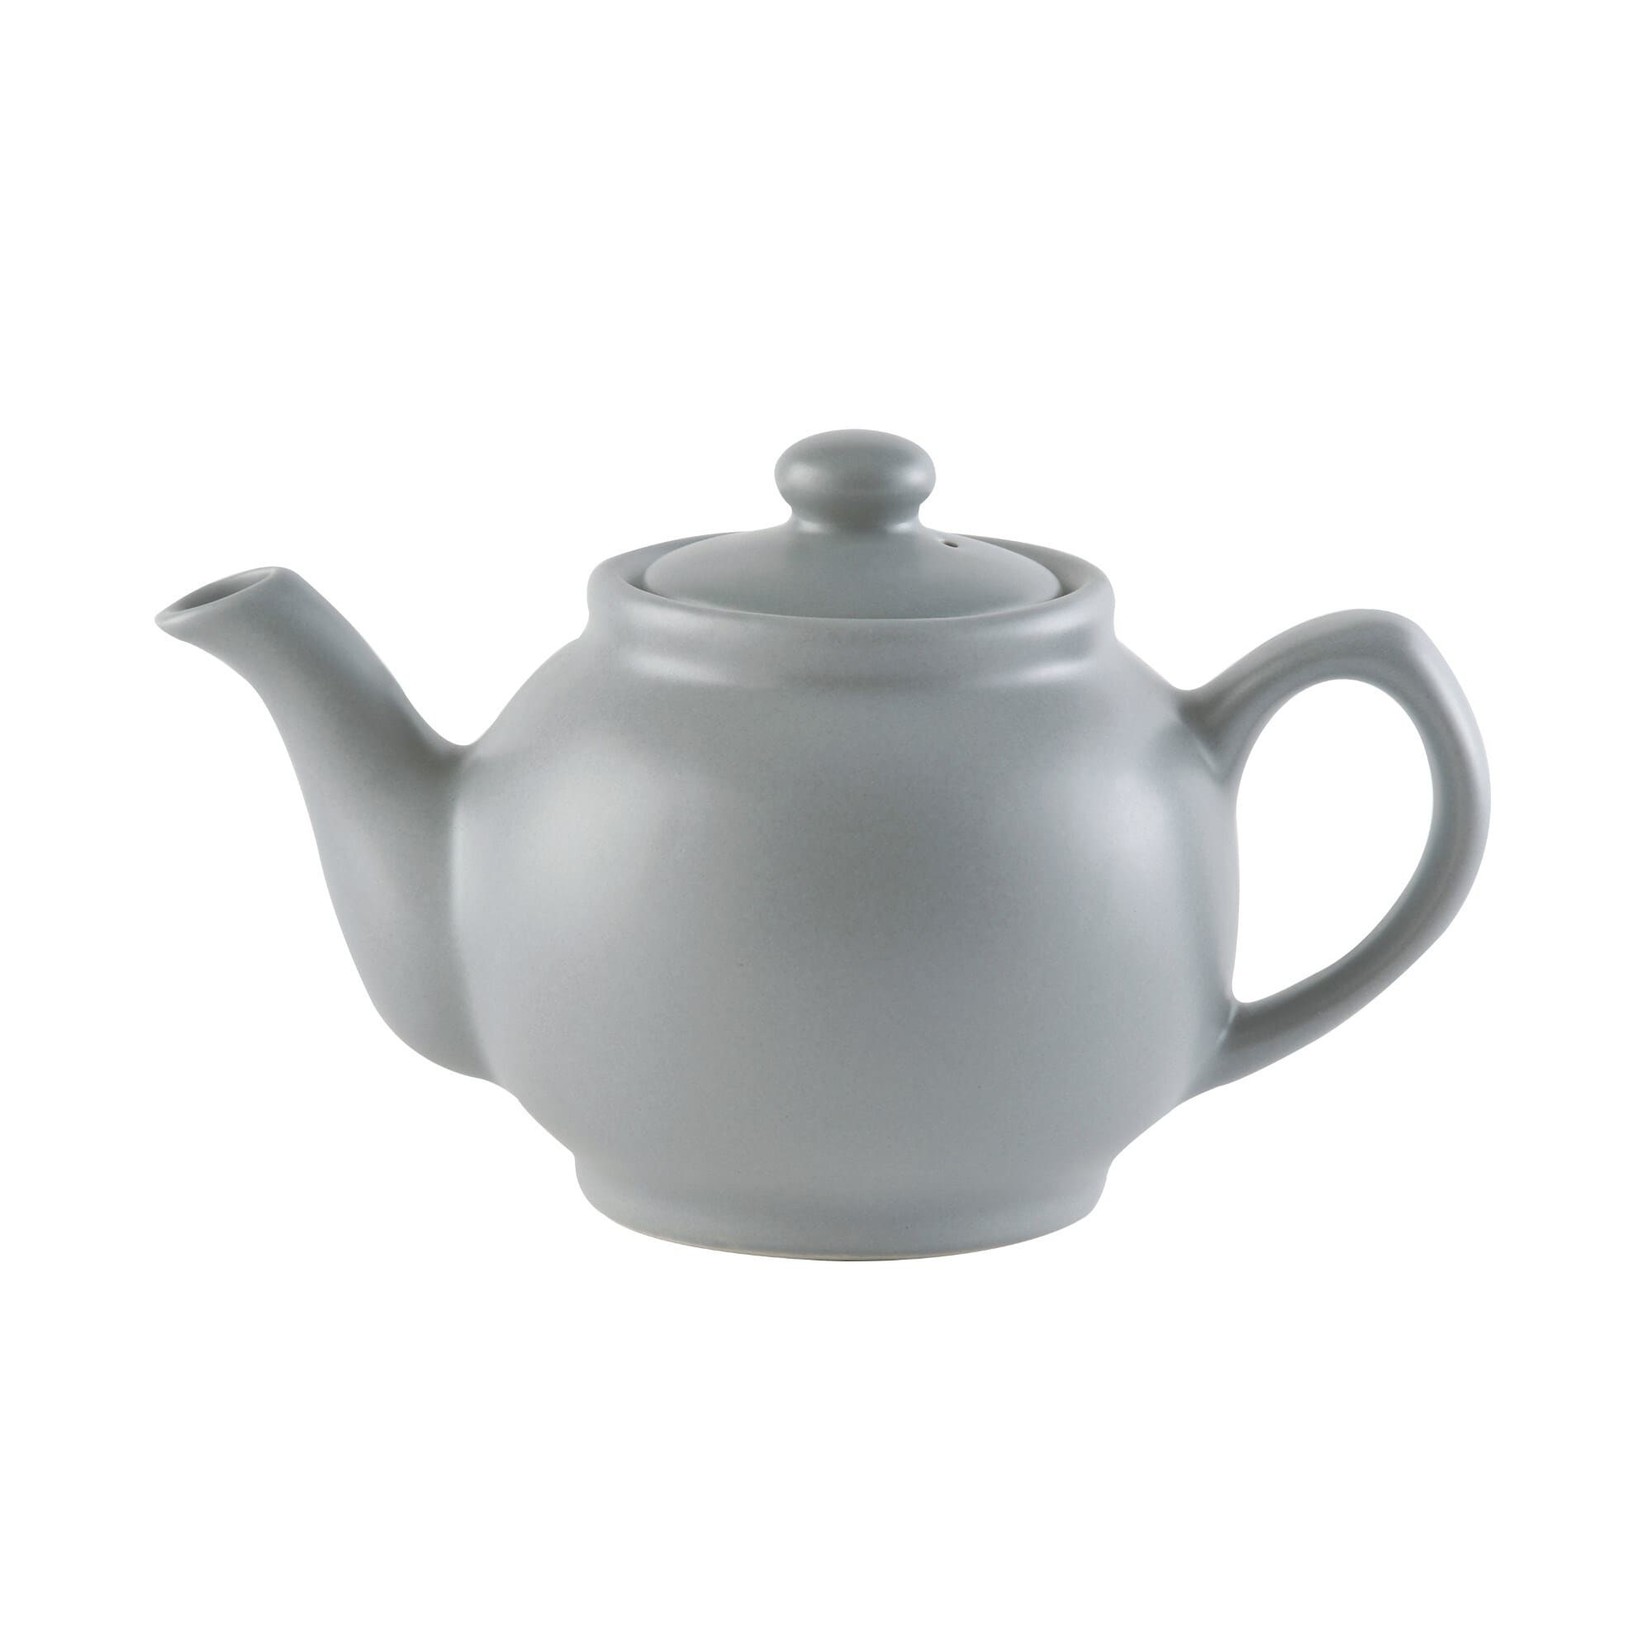 PRICE & KENSINGTON PRICE & KENSINGTON Teapot 6 Cup - Matte Grey